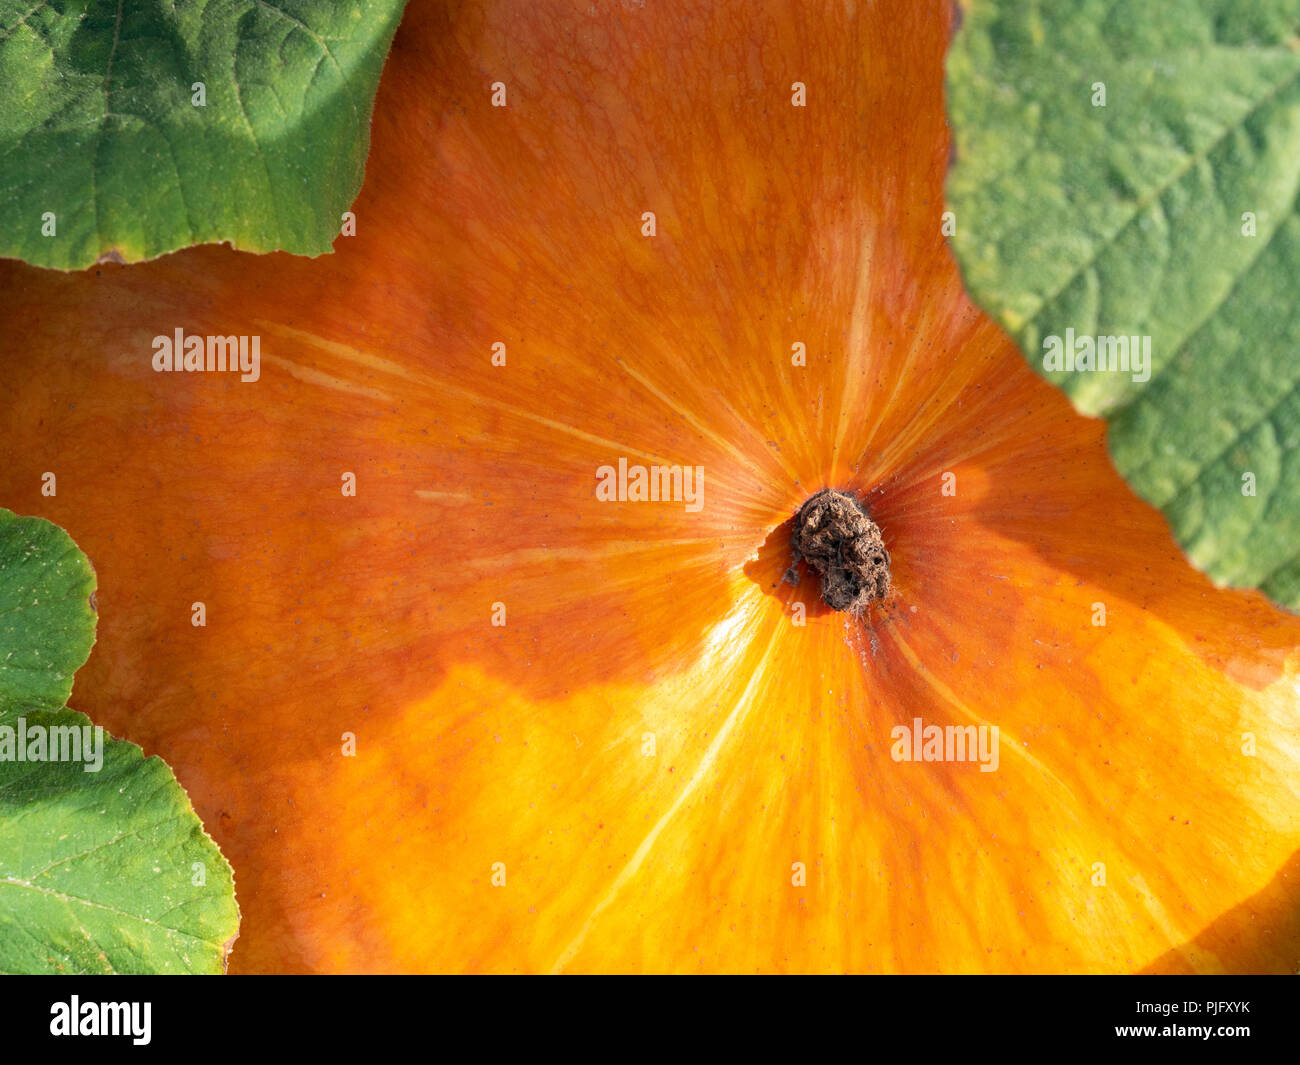 Orange pumpkin texture. Close up. Top view. Stock Photo